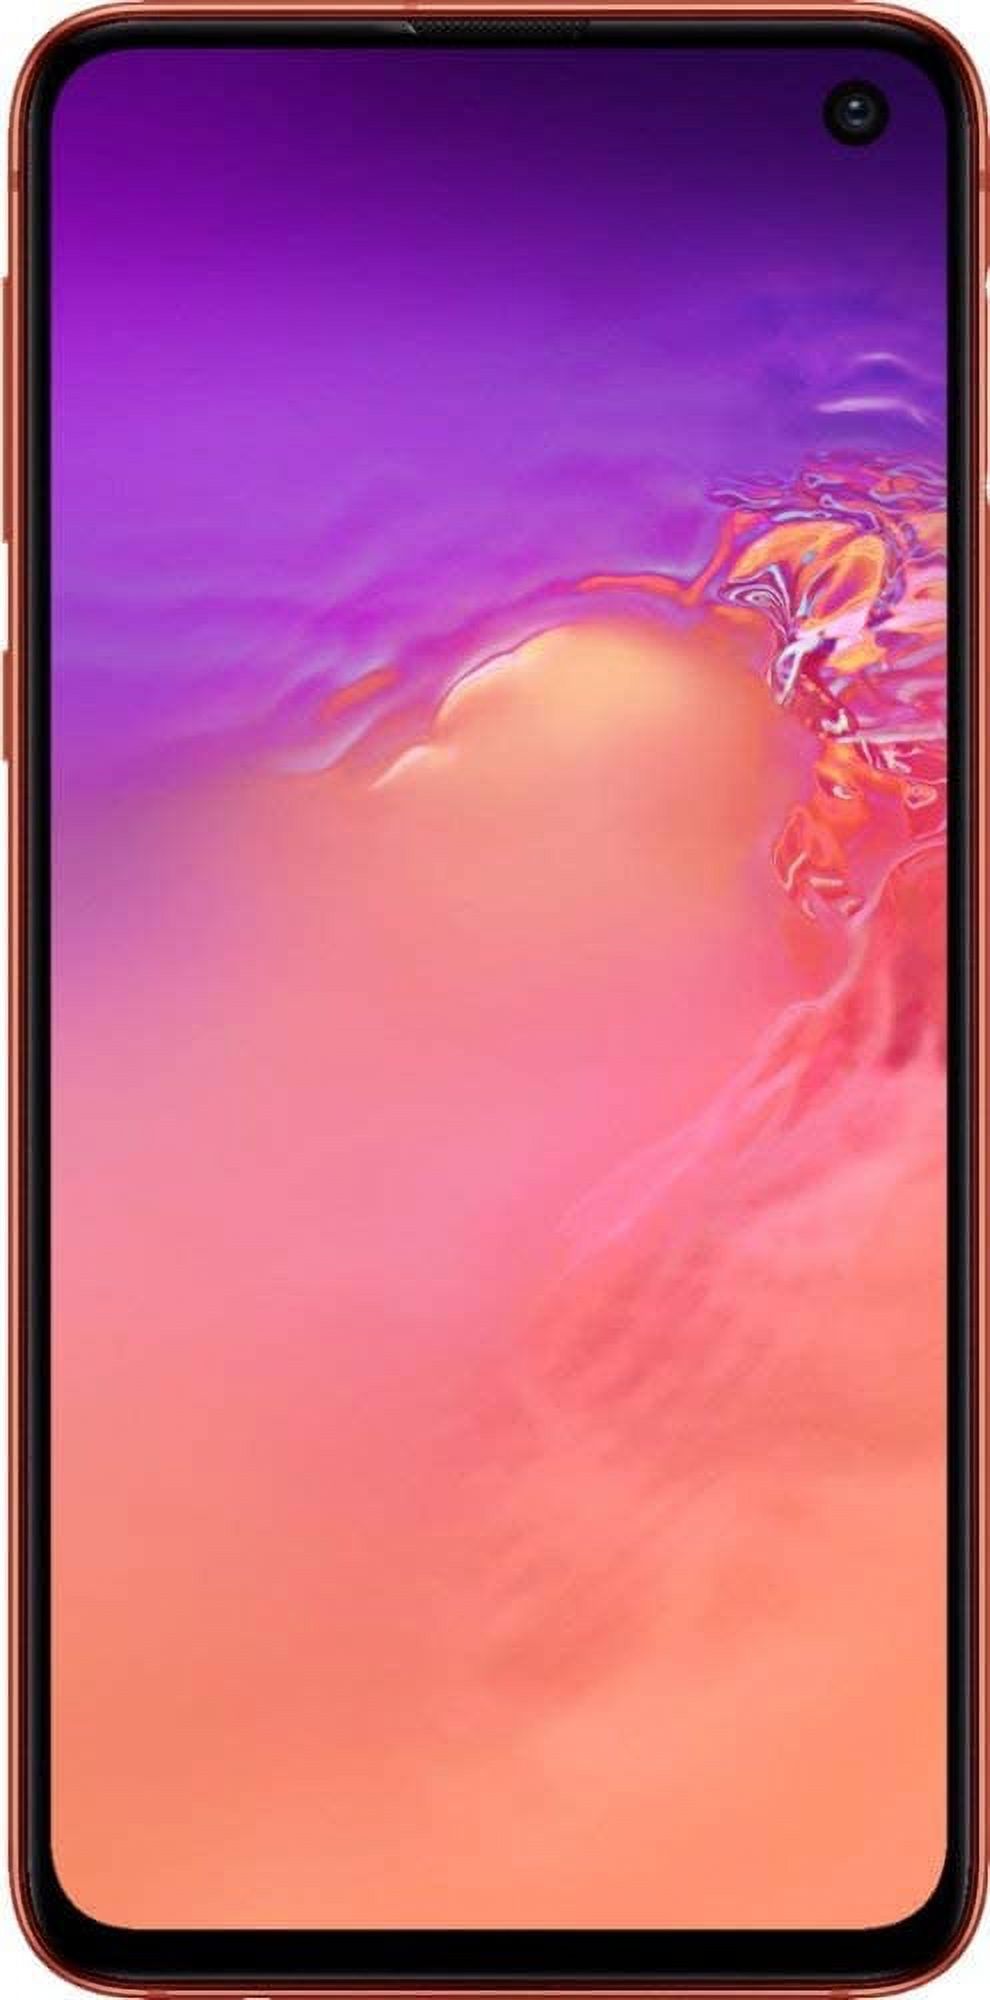 Restored Samsung Galaxy S10e SM-G970U 128GB AT&T Unlocked Smartphone - Flamingo Pink (Refurbished) - image 2 of 5